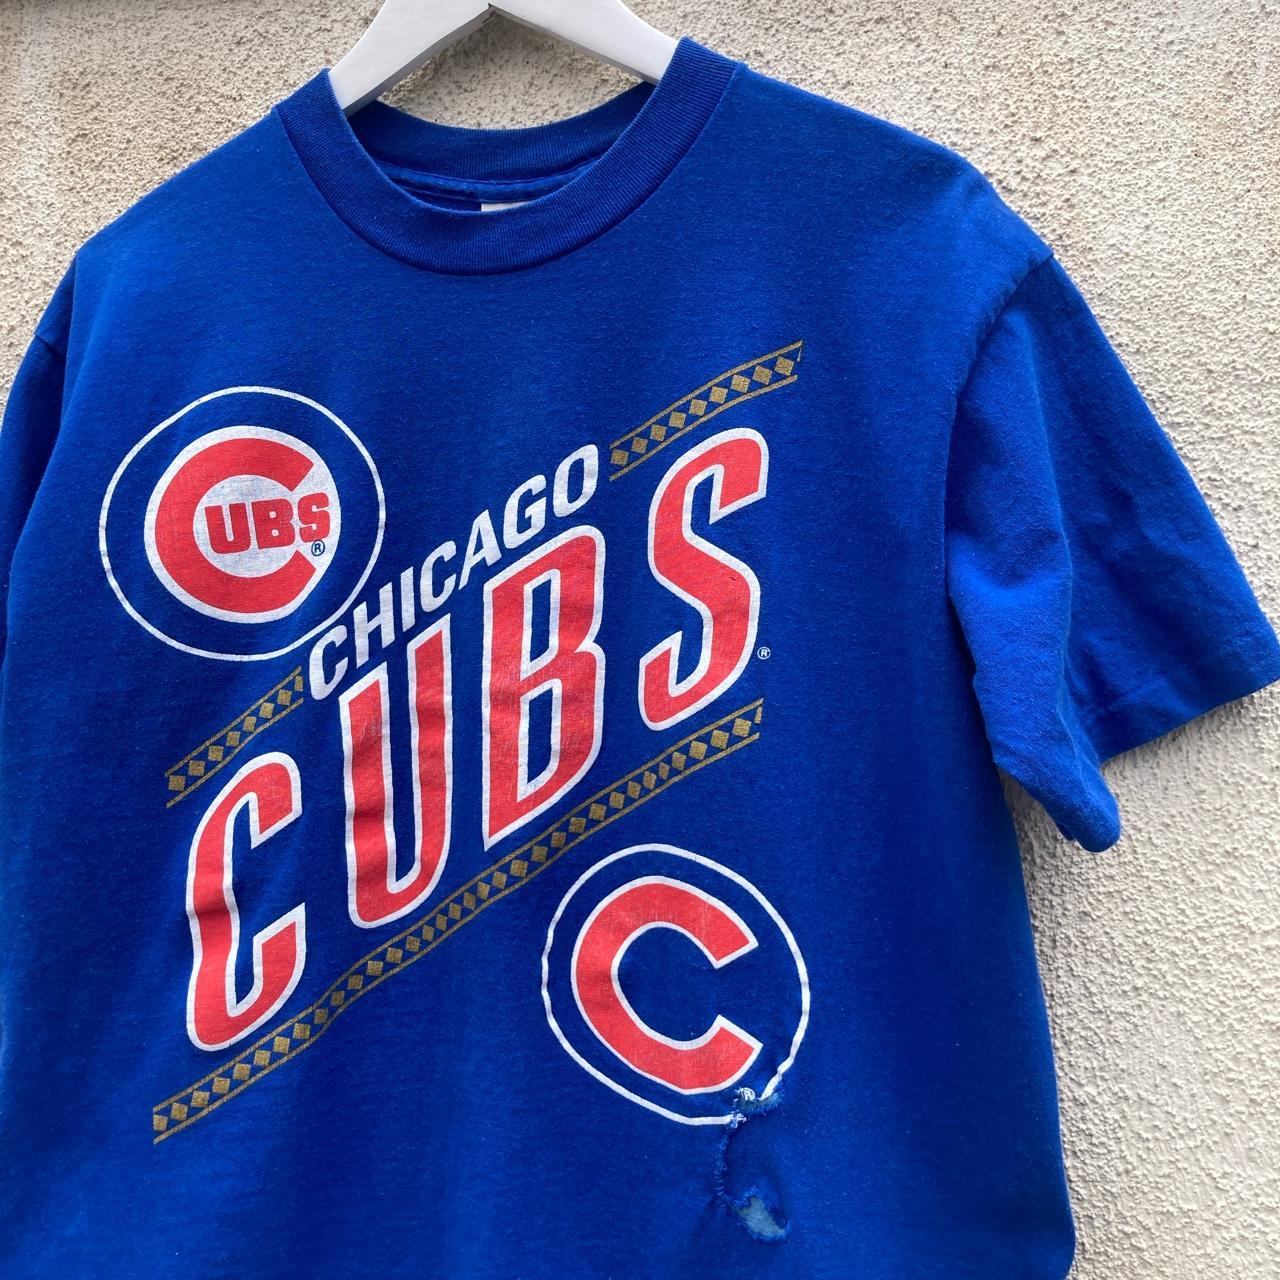 Mens 1991 Chicago Cubs Shirt Size Large Single - Depop